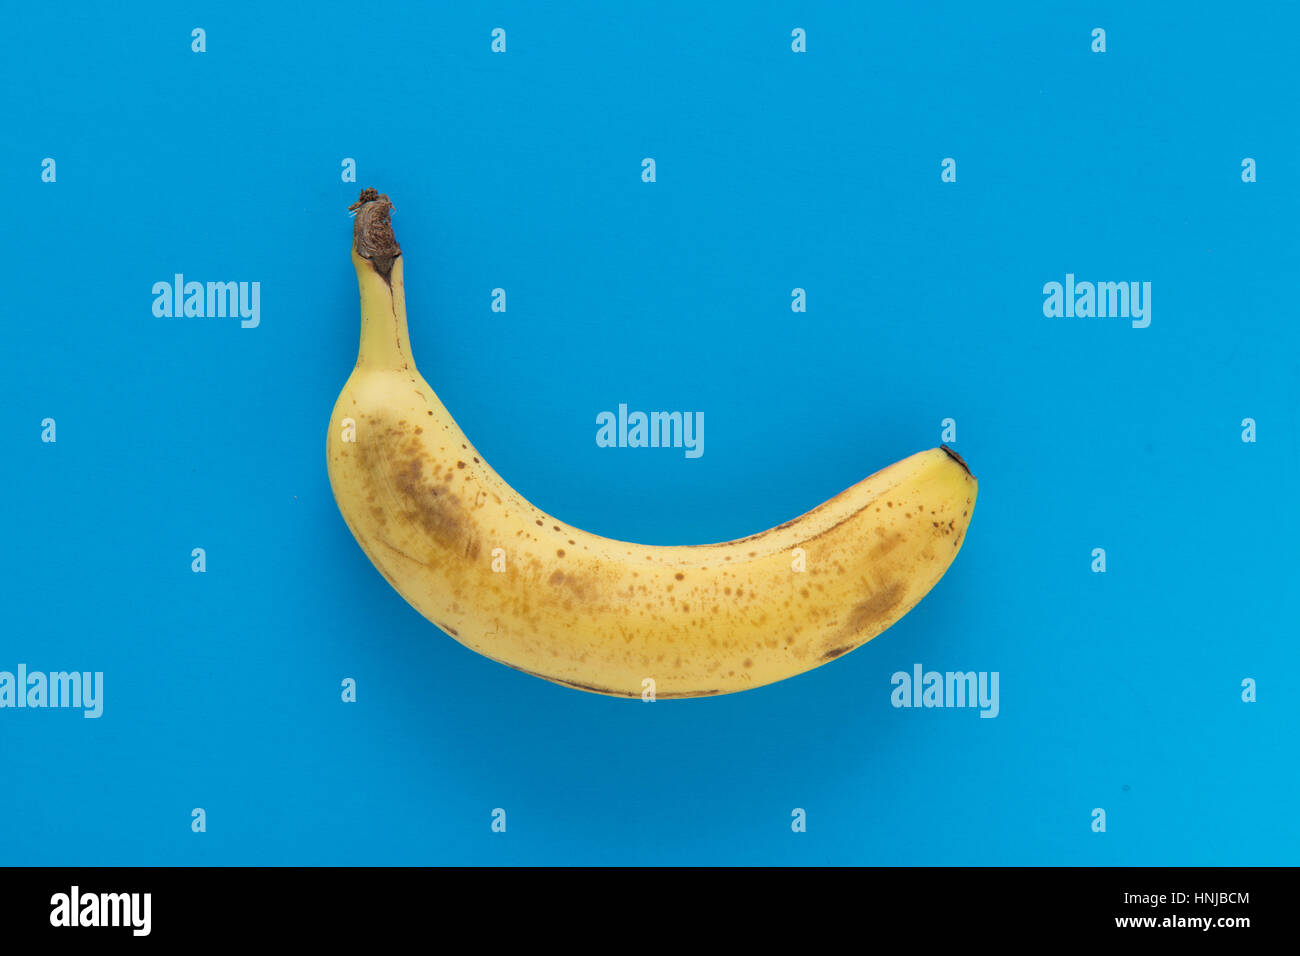 Slightly overripe banana on a light blue background. Stock Photo